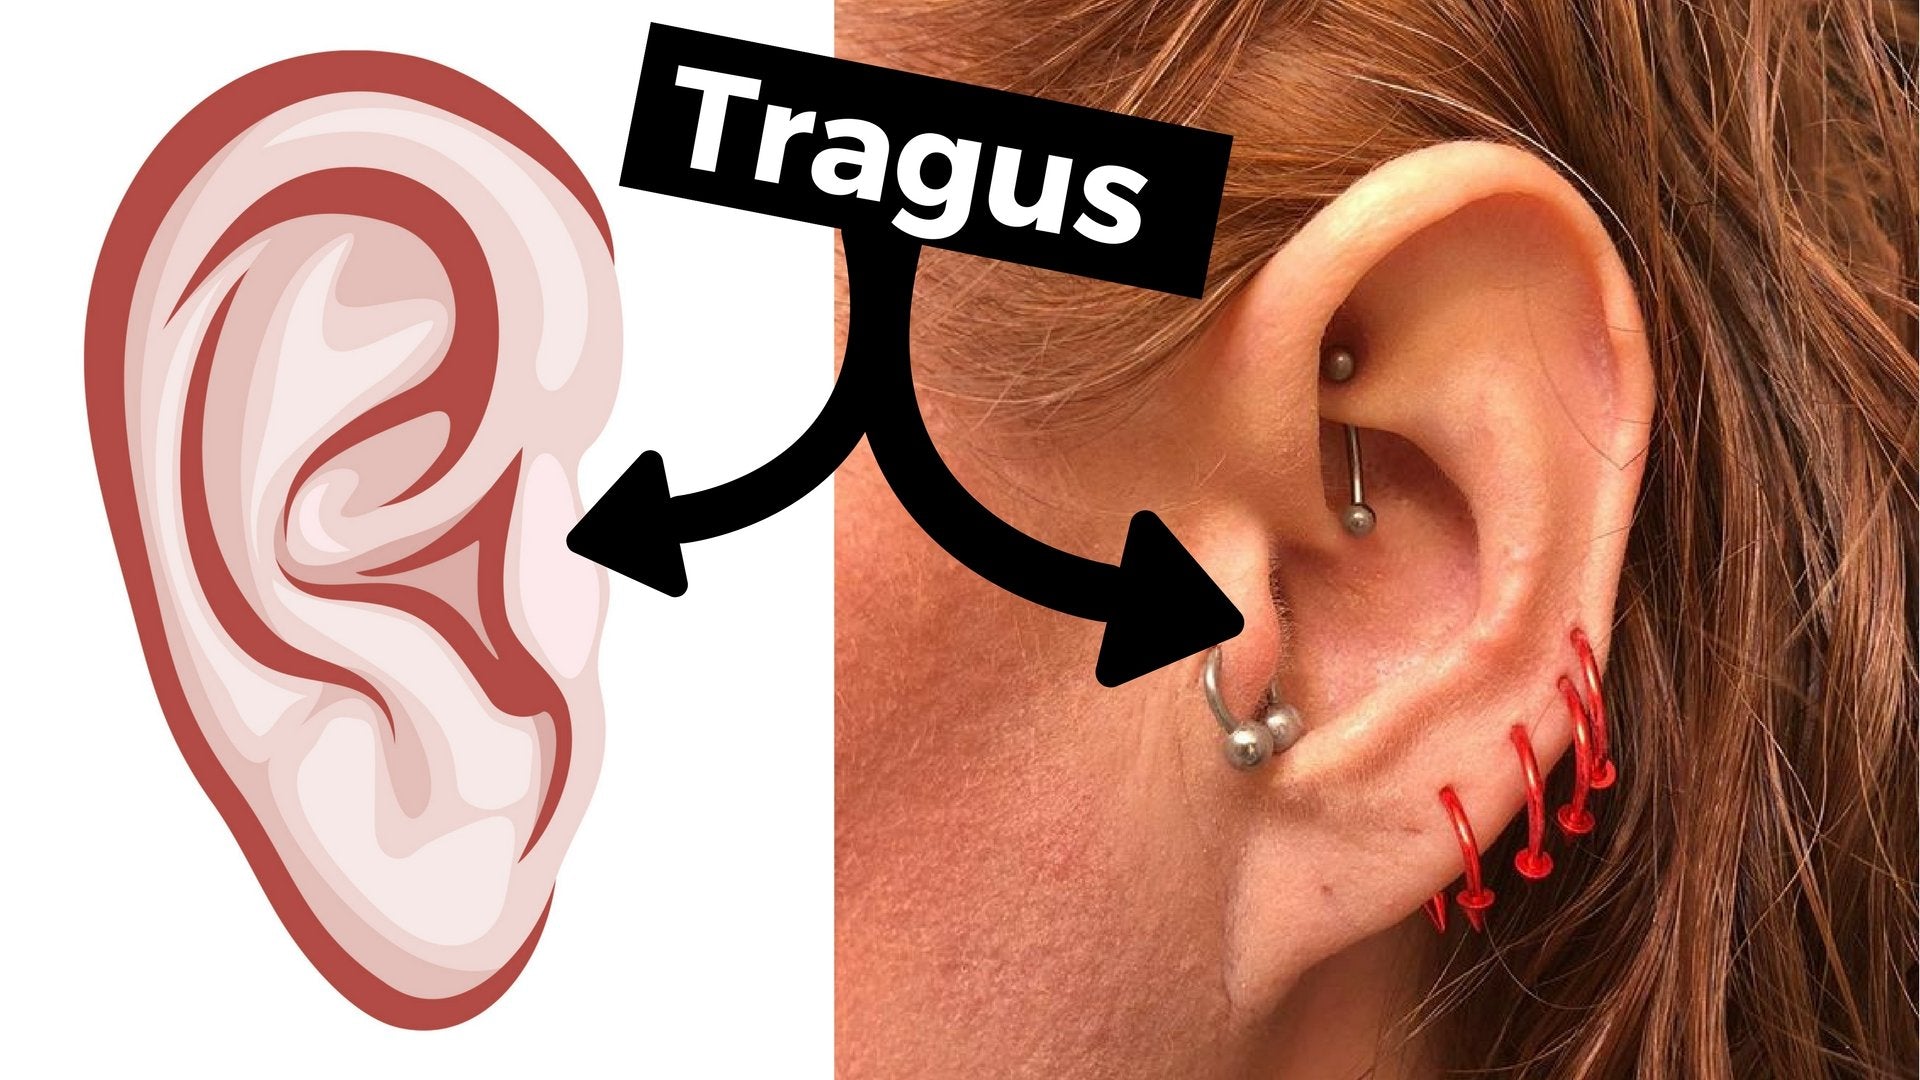 Where Is a Tragus Body Piercing?